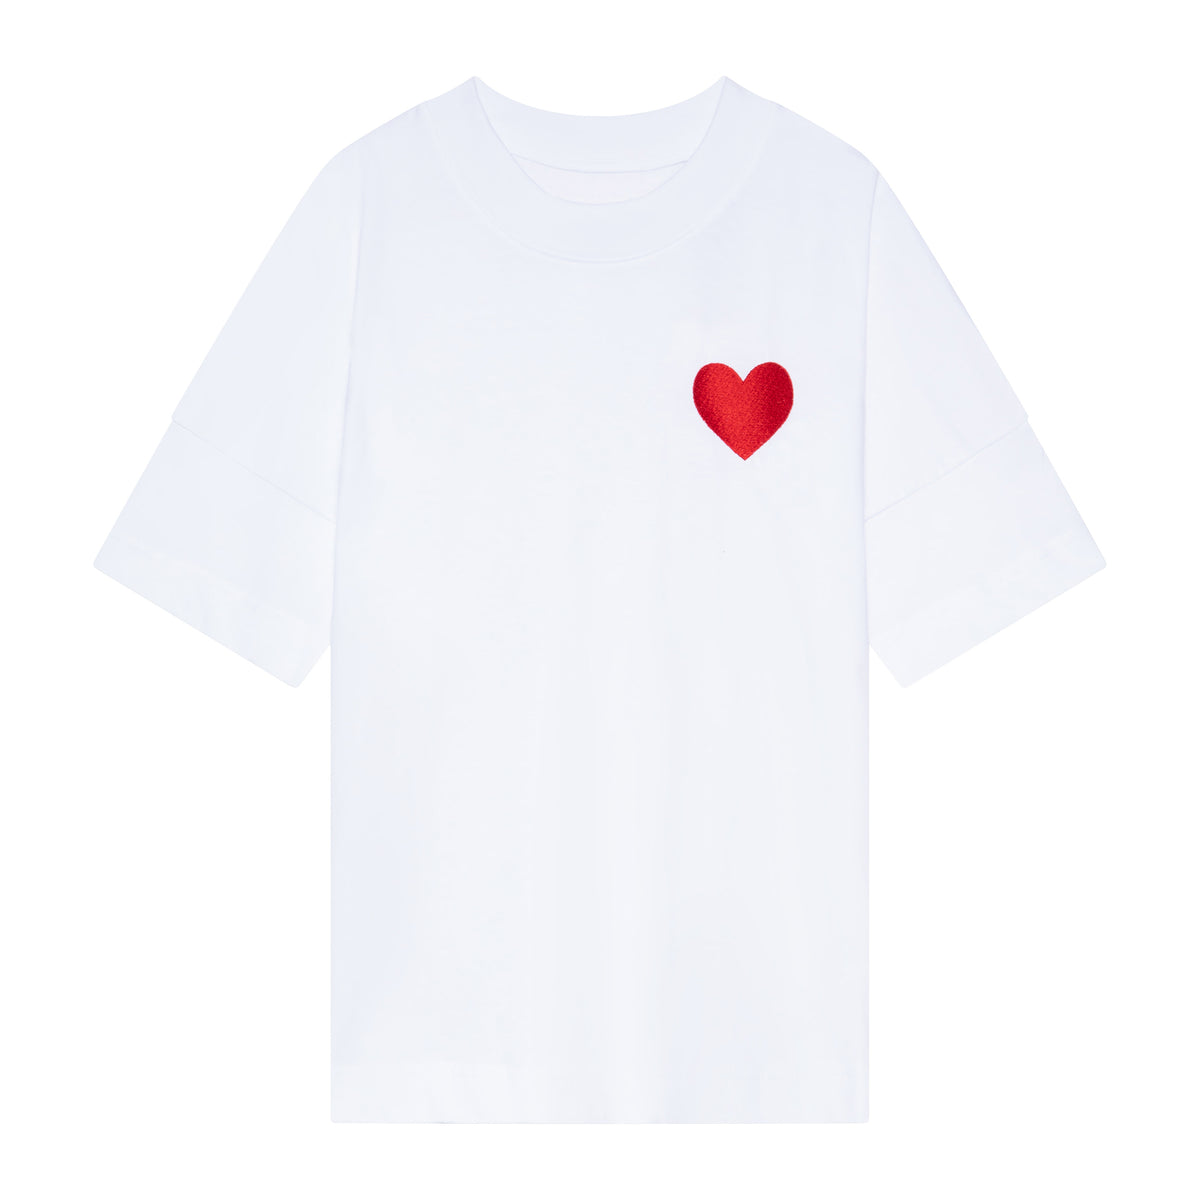 Oversized White T-Shirt. The Big Heart